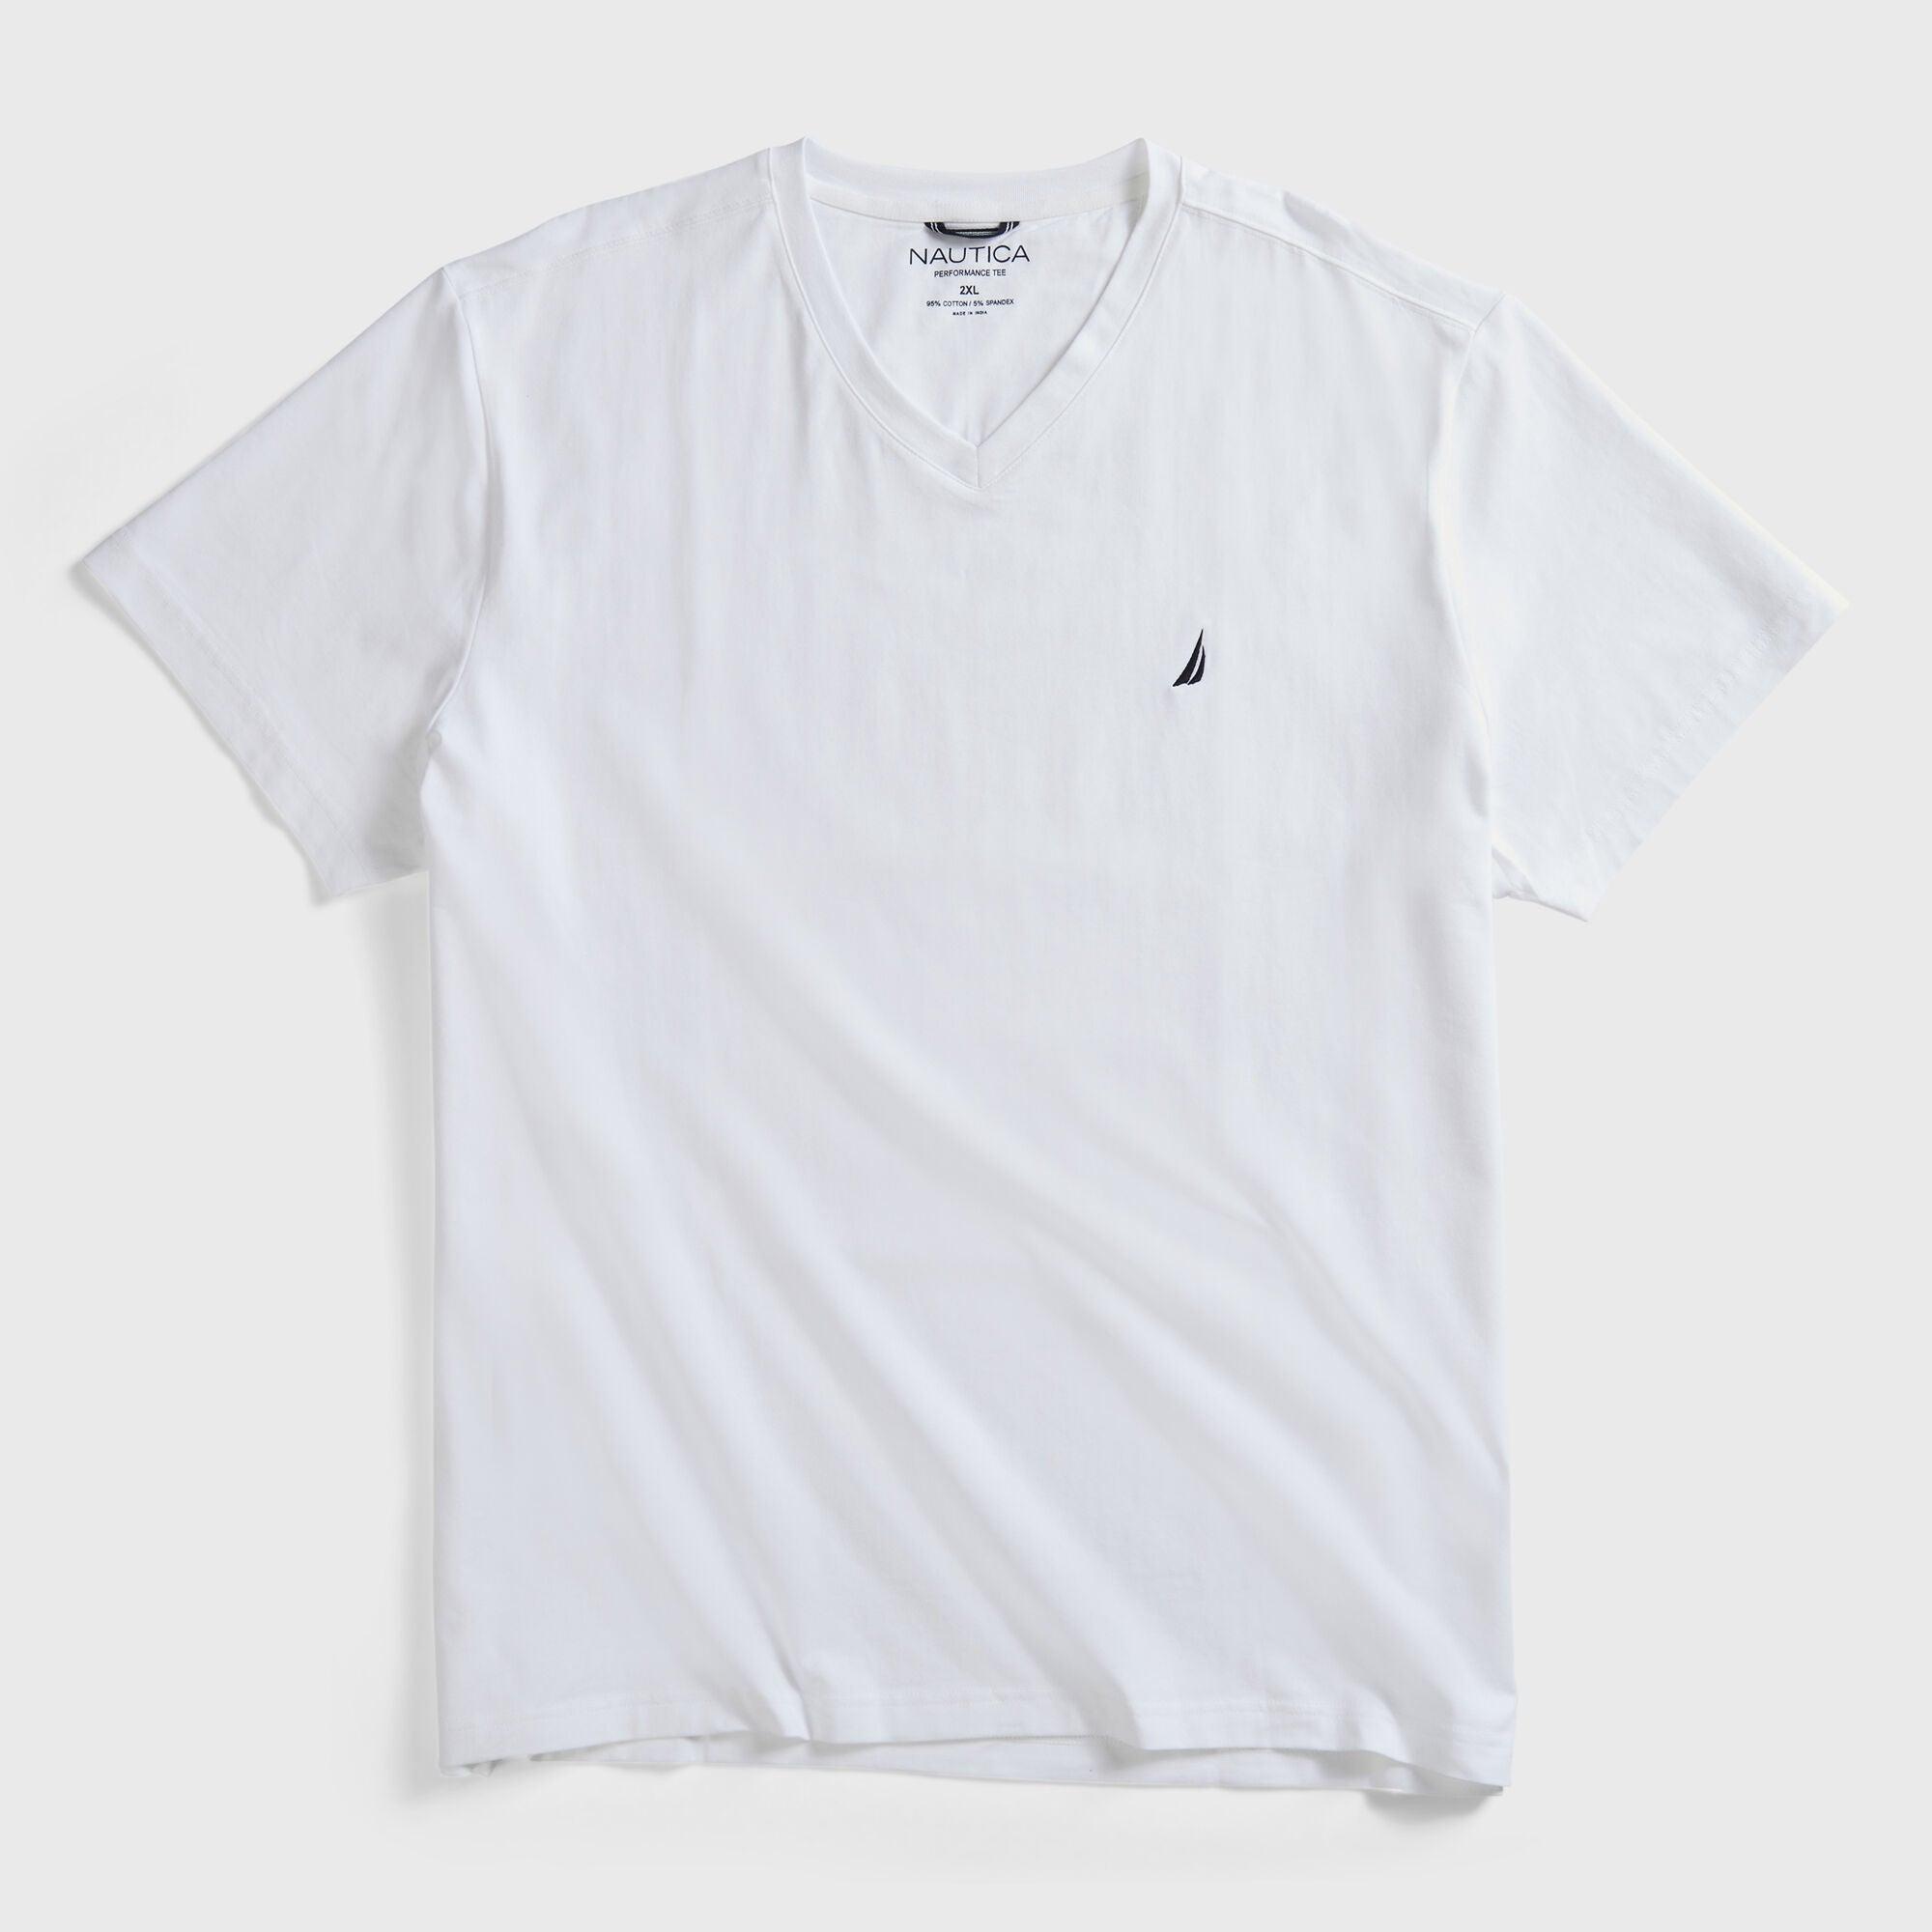 https://cdna.lystit.com/photos/shoppremiumoutlets/daaa8a7b/nautica-bright-white-Big-Tall-Performance-V-neck-Deck-T-shirt.jpeg